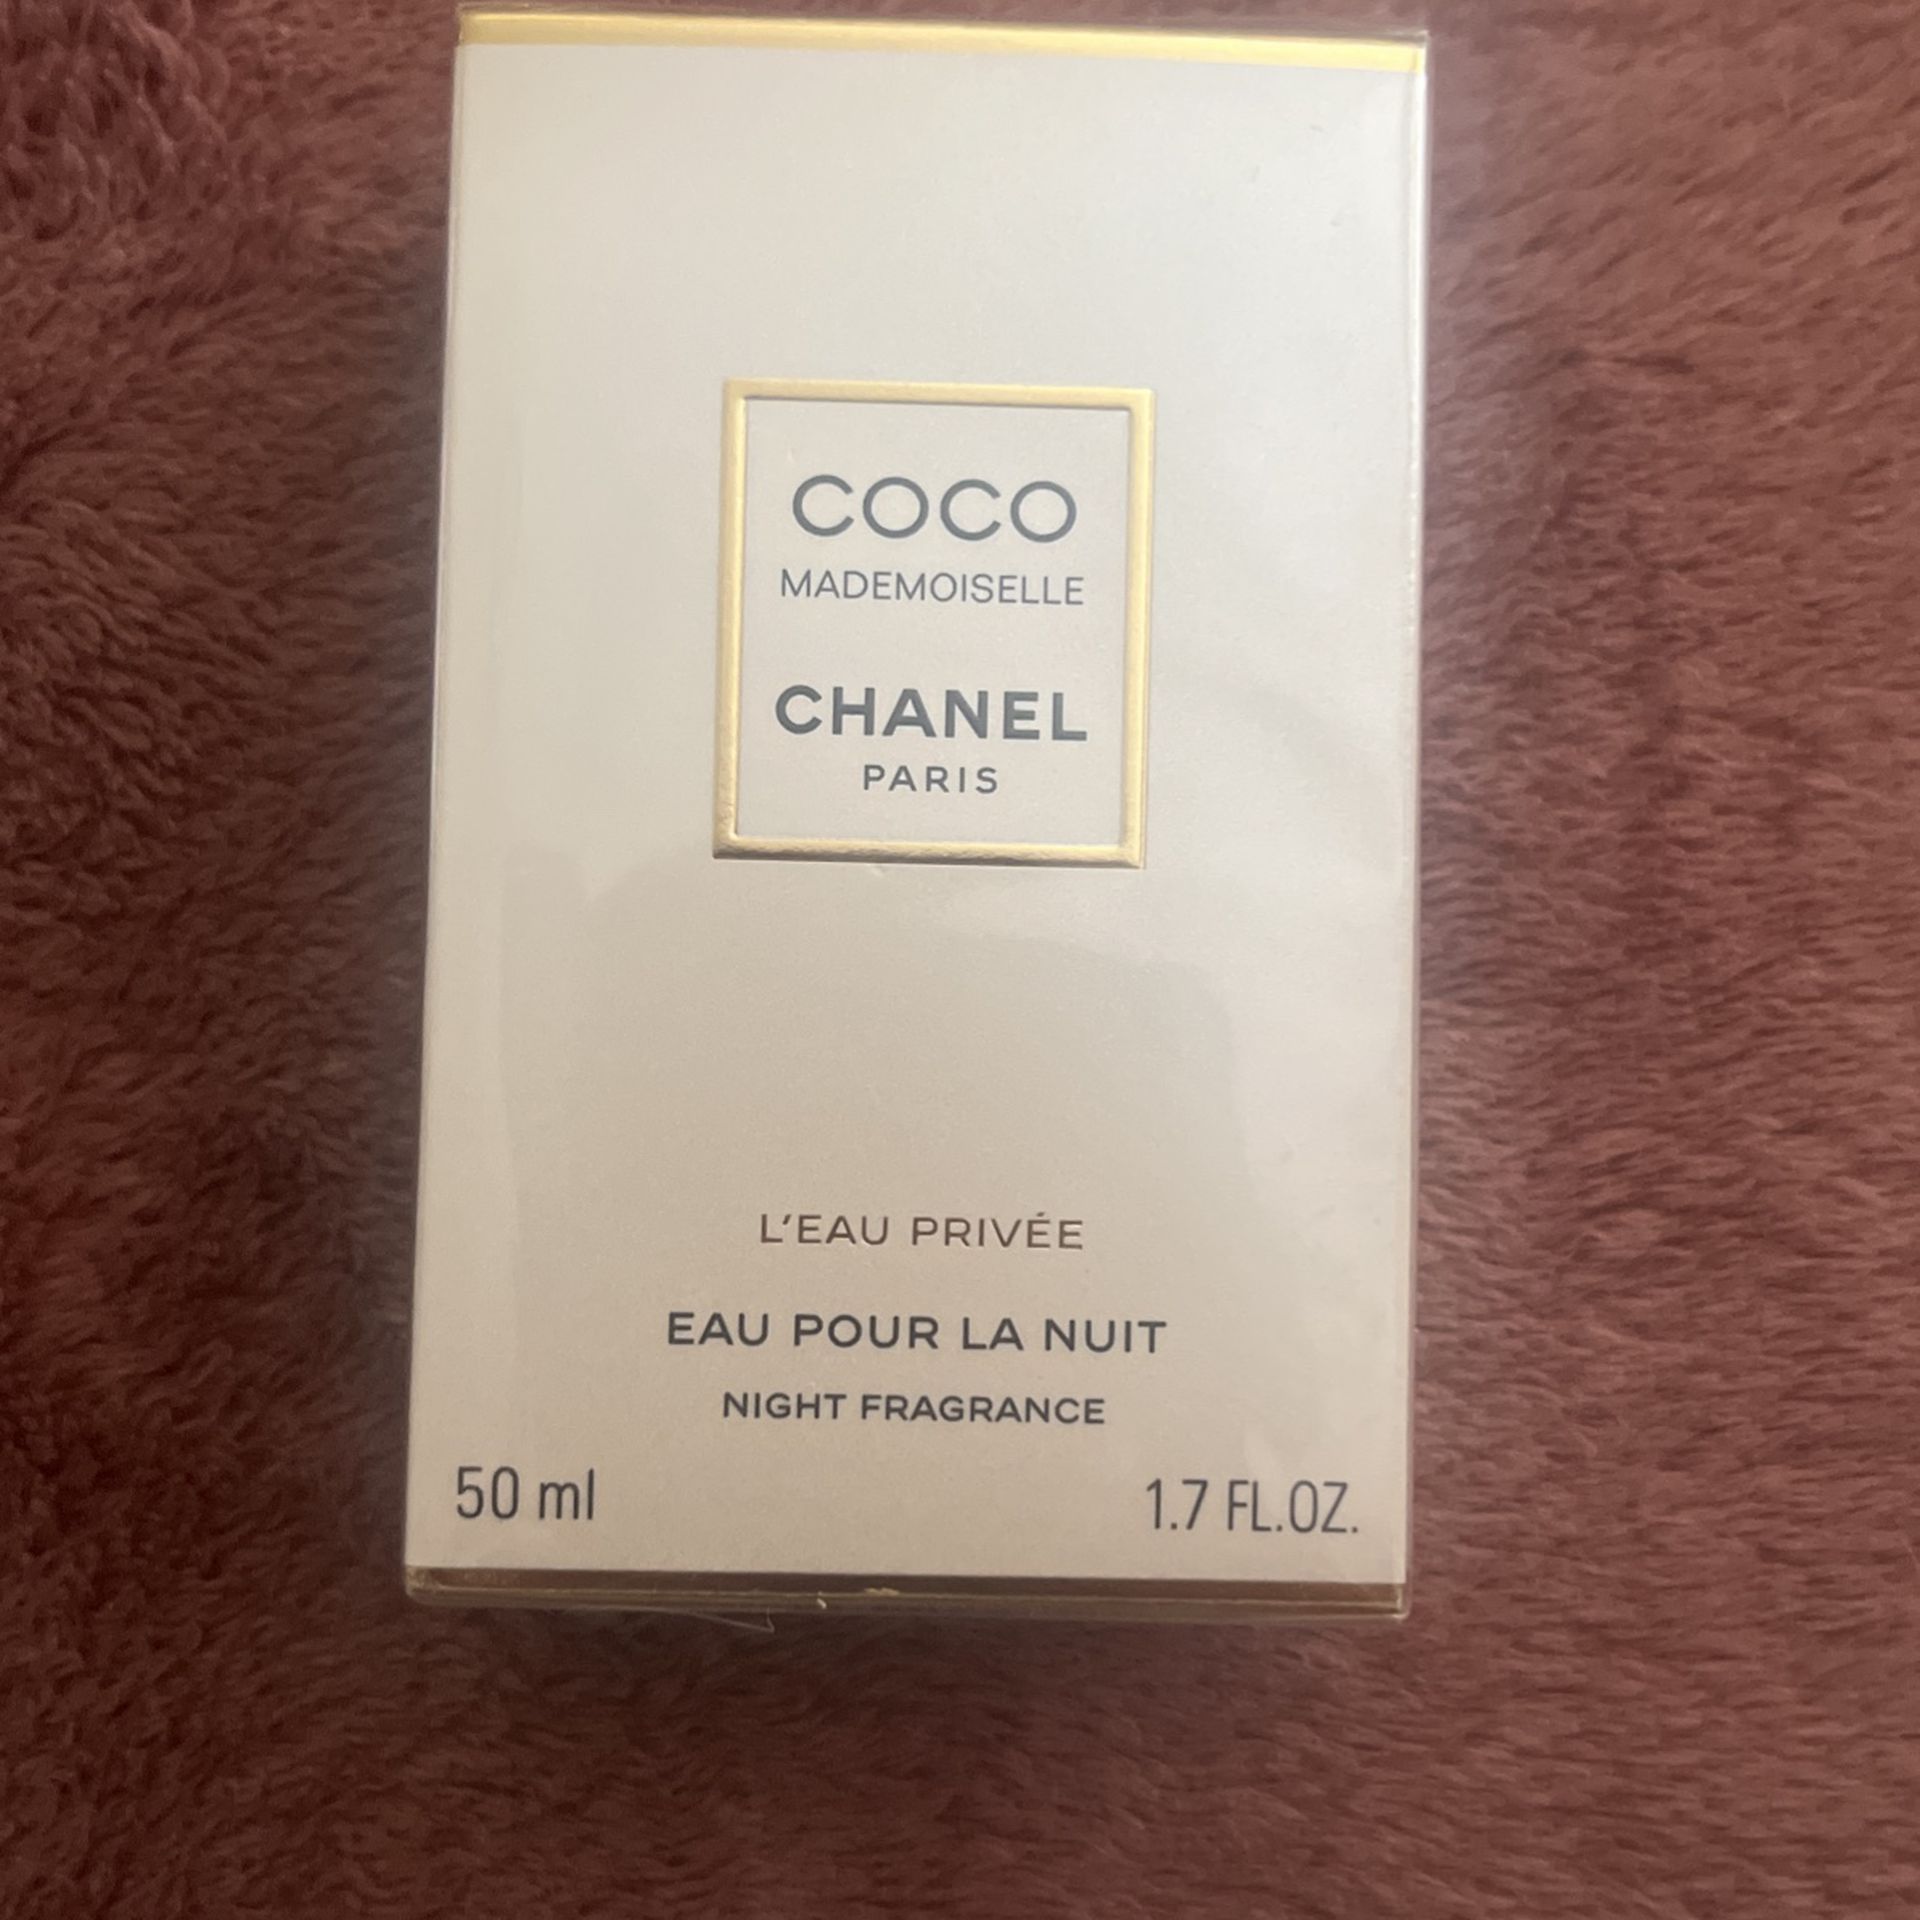 Chanel Perfume coco mademoiselle